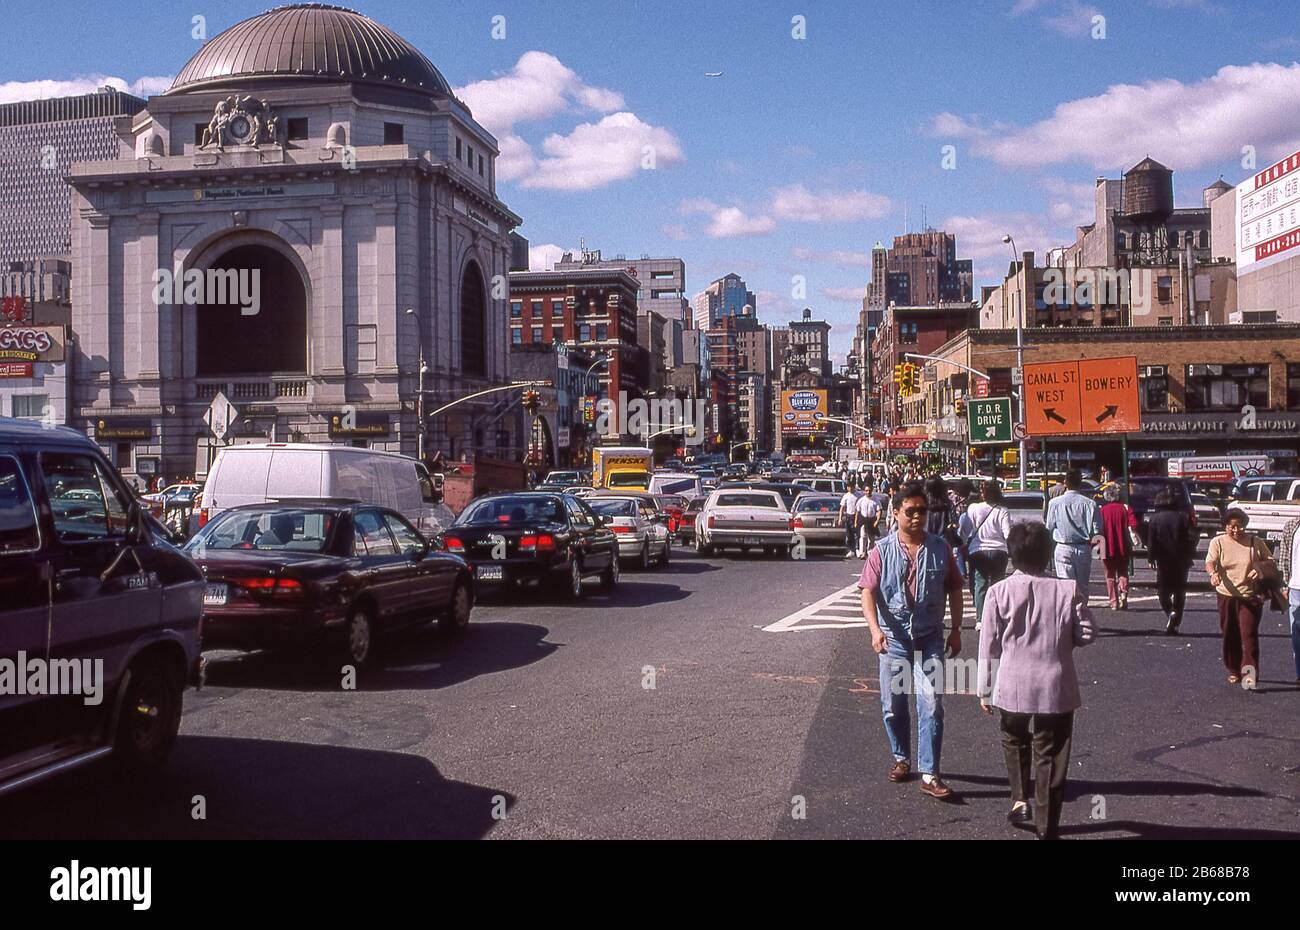 Incrocio di Canal St West e Bowery, New York City, USA, 1998 Foto Stock